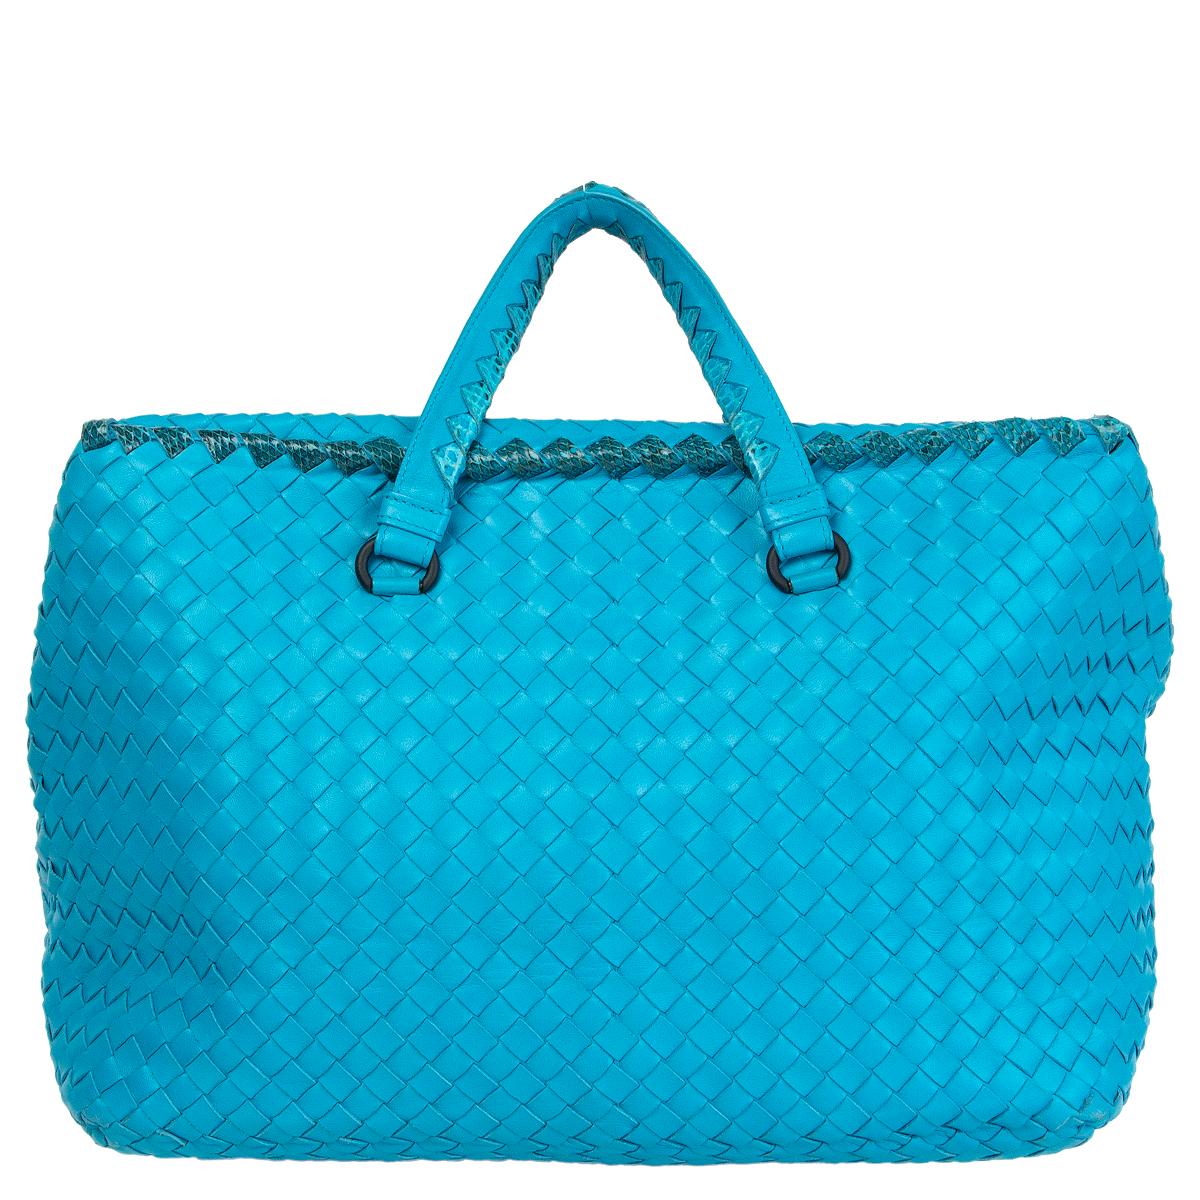 Blue BOTTEGA VENETA turquoise leather & Karung Intrecciato Tote Bag